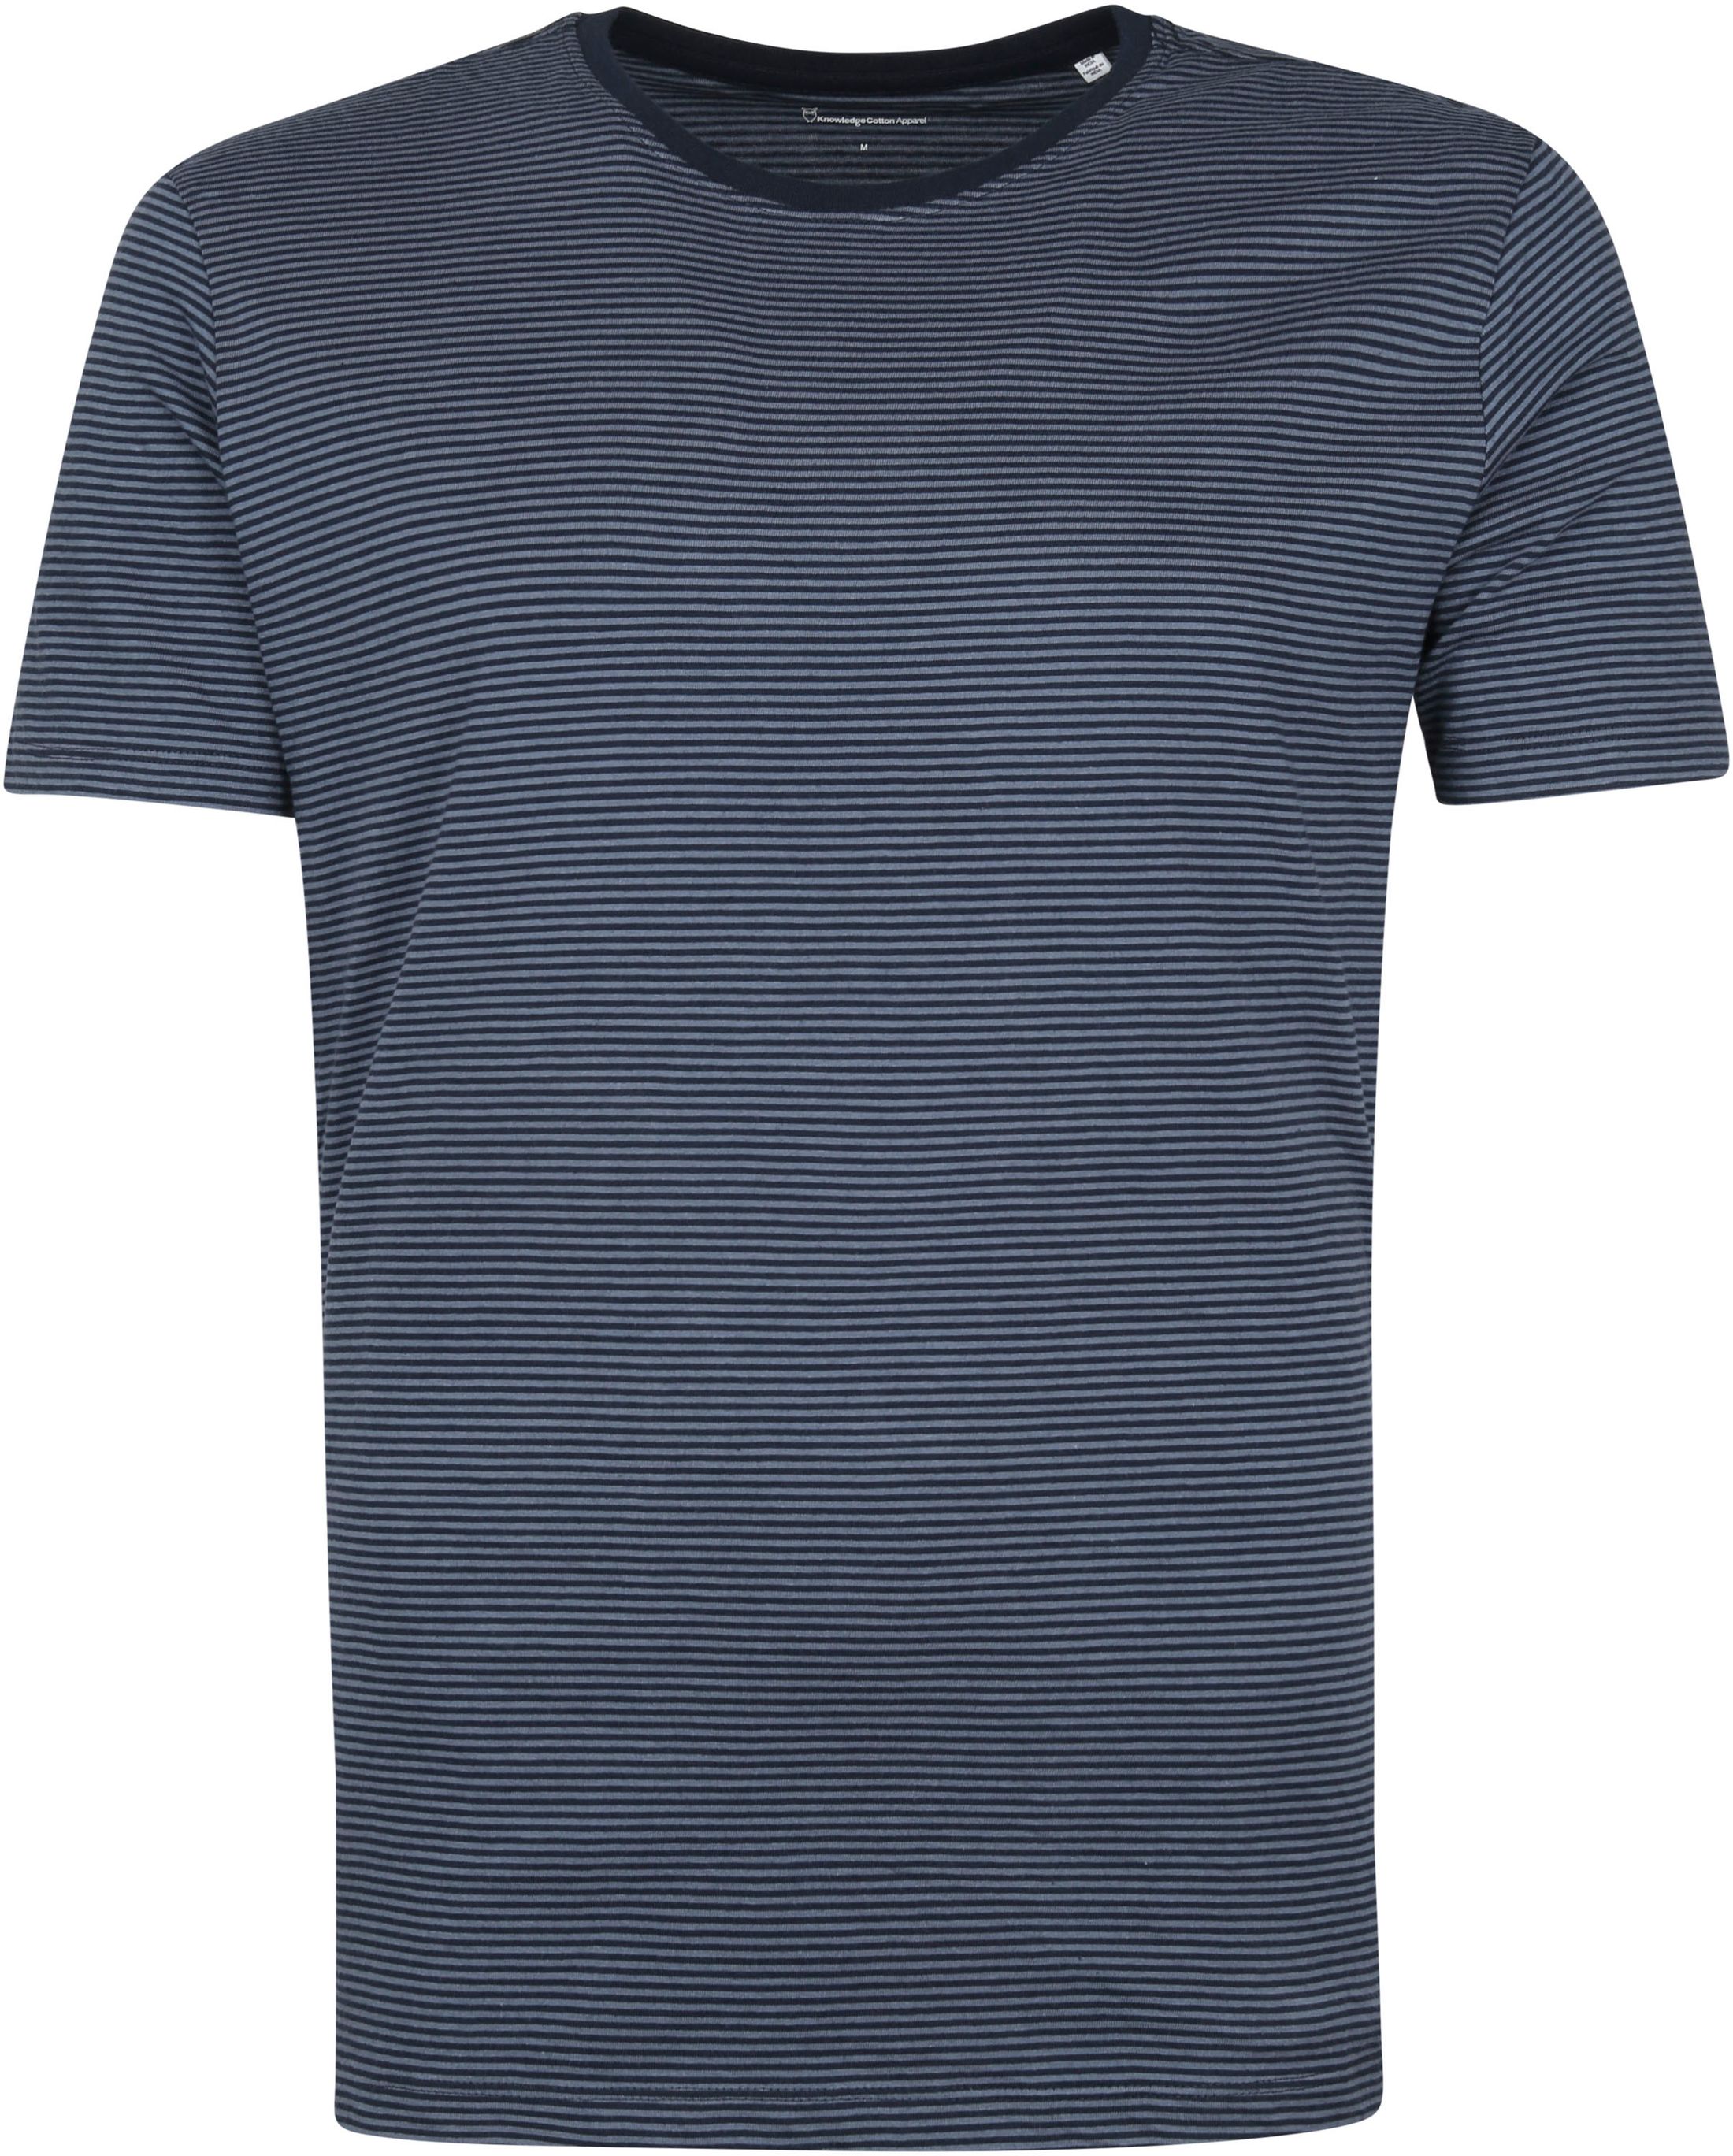 KnowledgeCotton Apparel T-shirt Desert Sun Stripe Blue size L